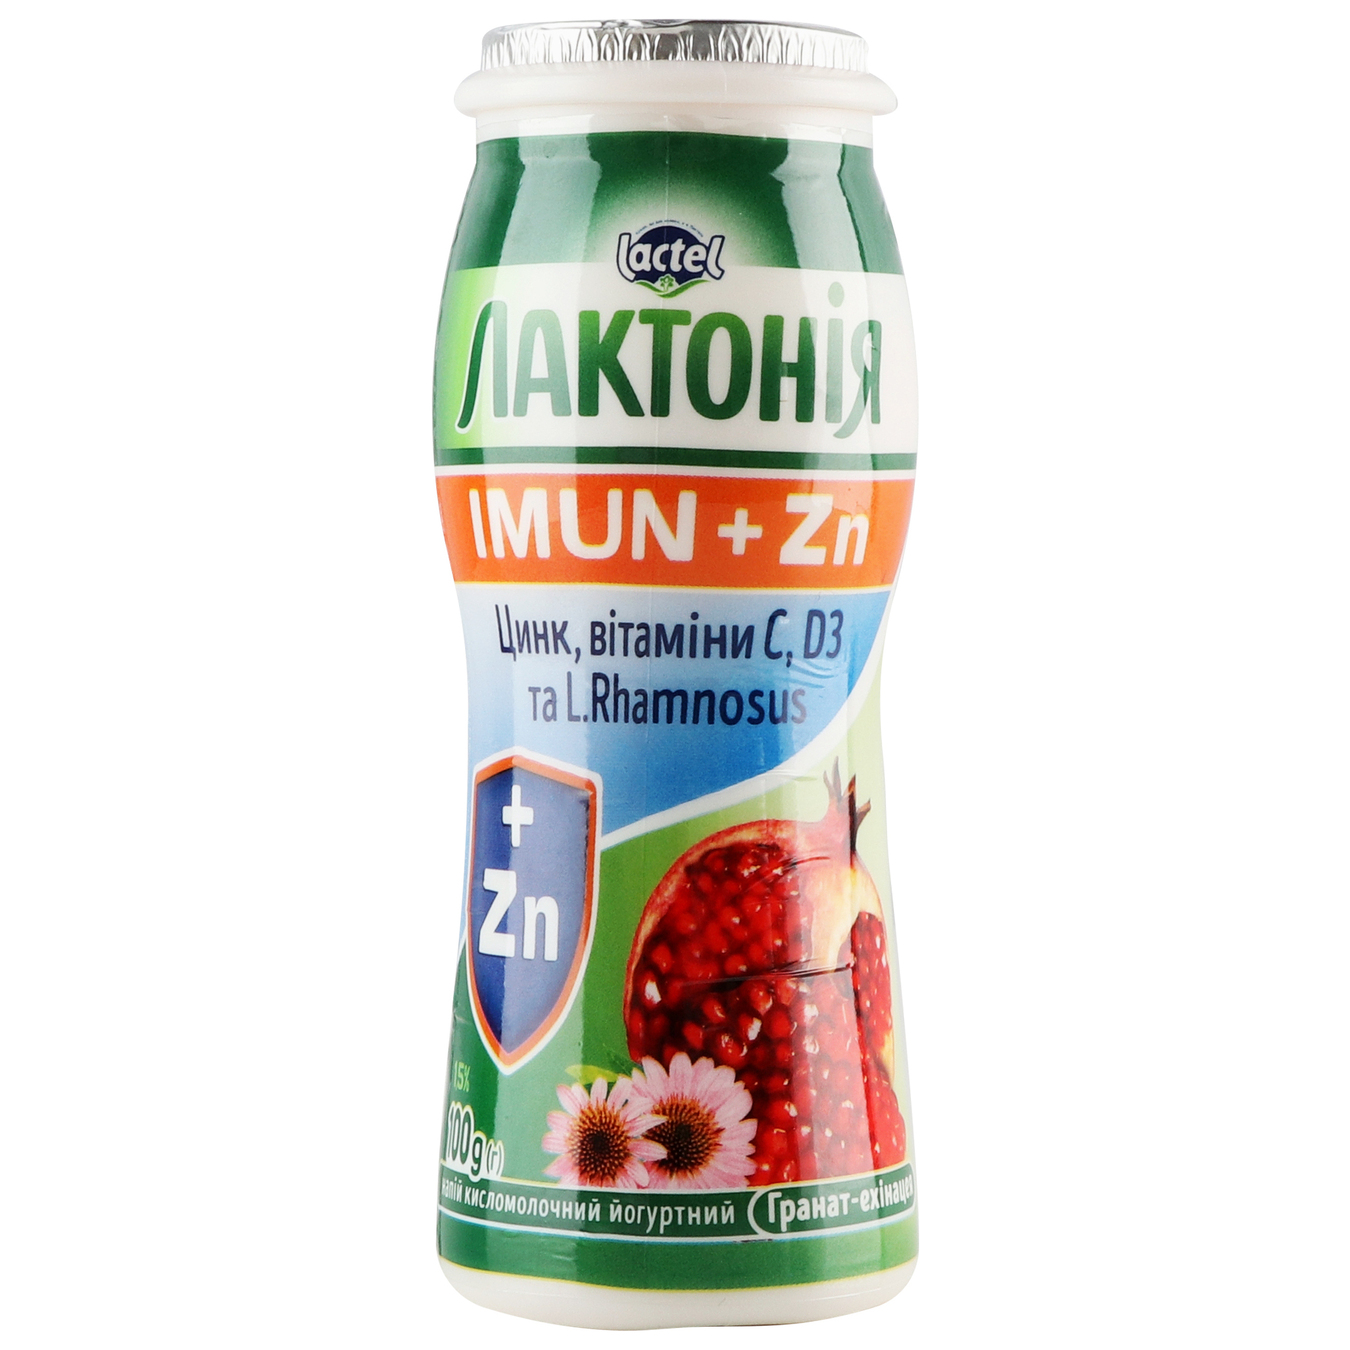 Drink Lactonia sour milk yogurt Imun + pomegranate-echinacea 1.5% 100g bottle